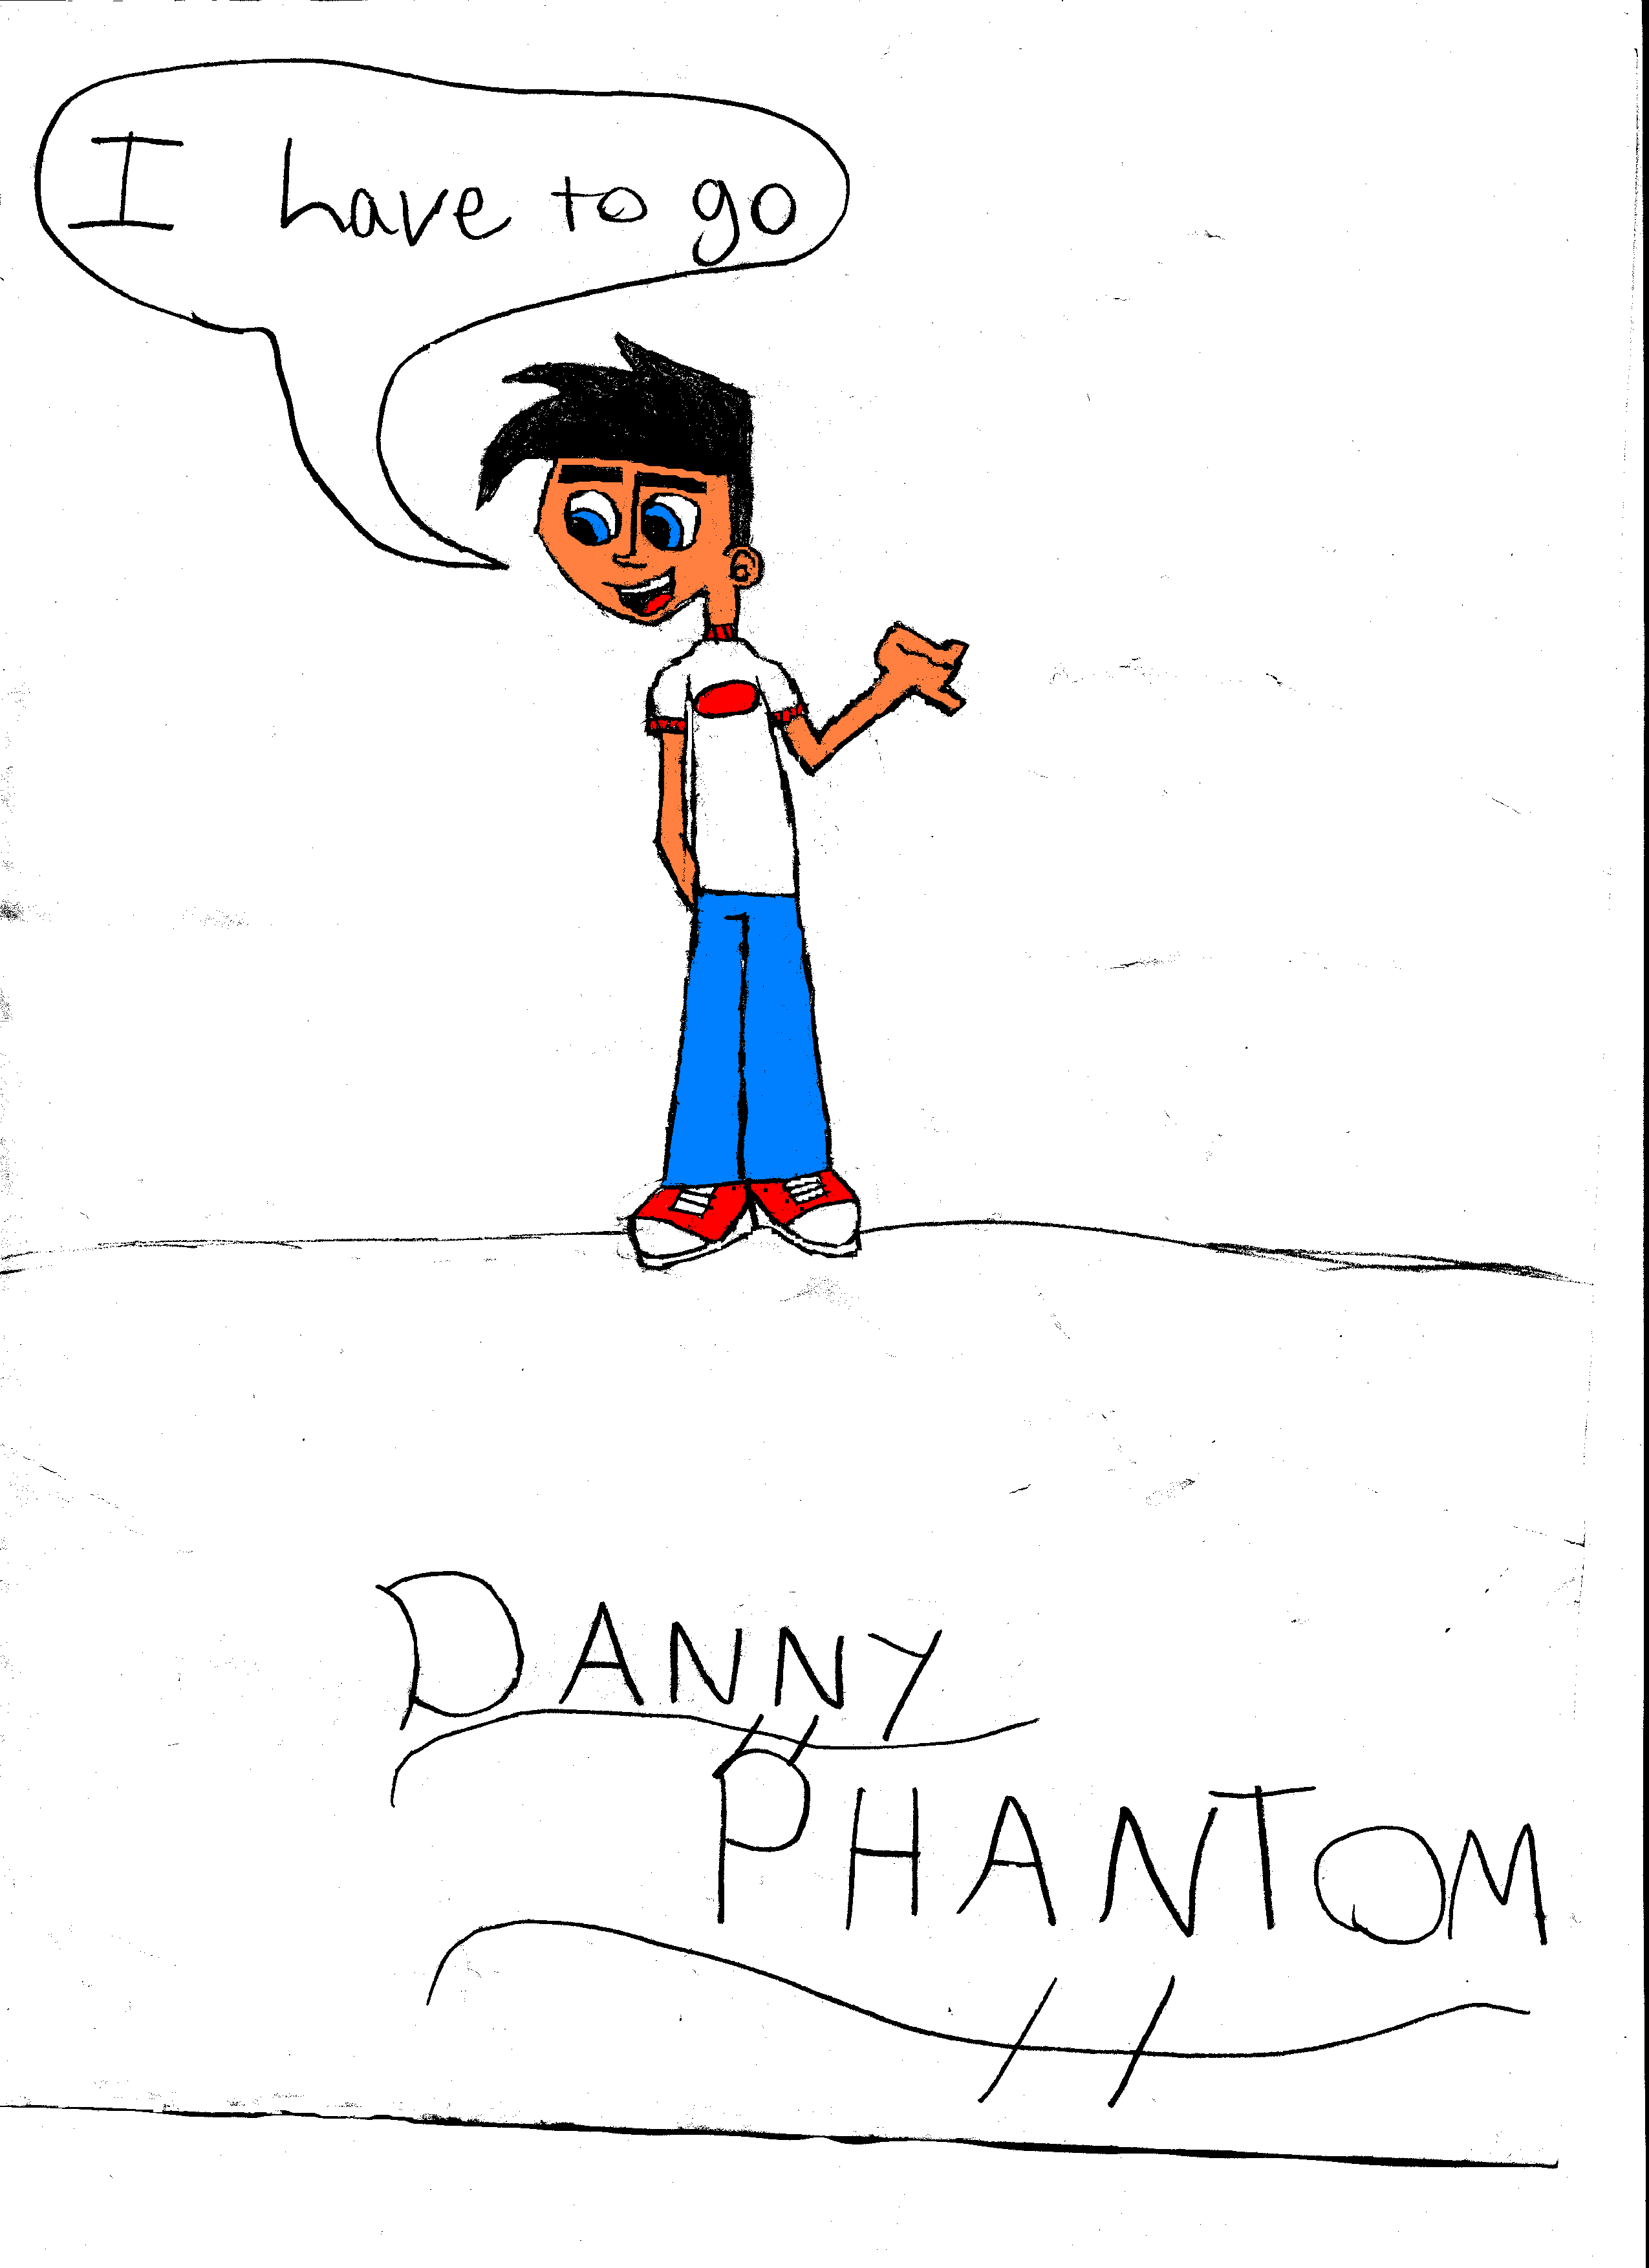 Danny Phantom - Have to go by rachel2005